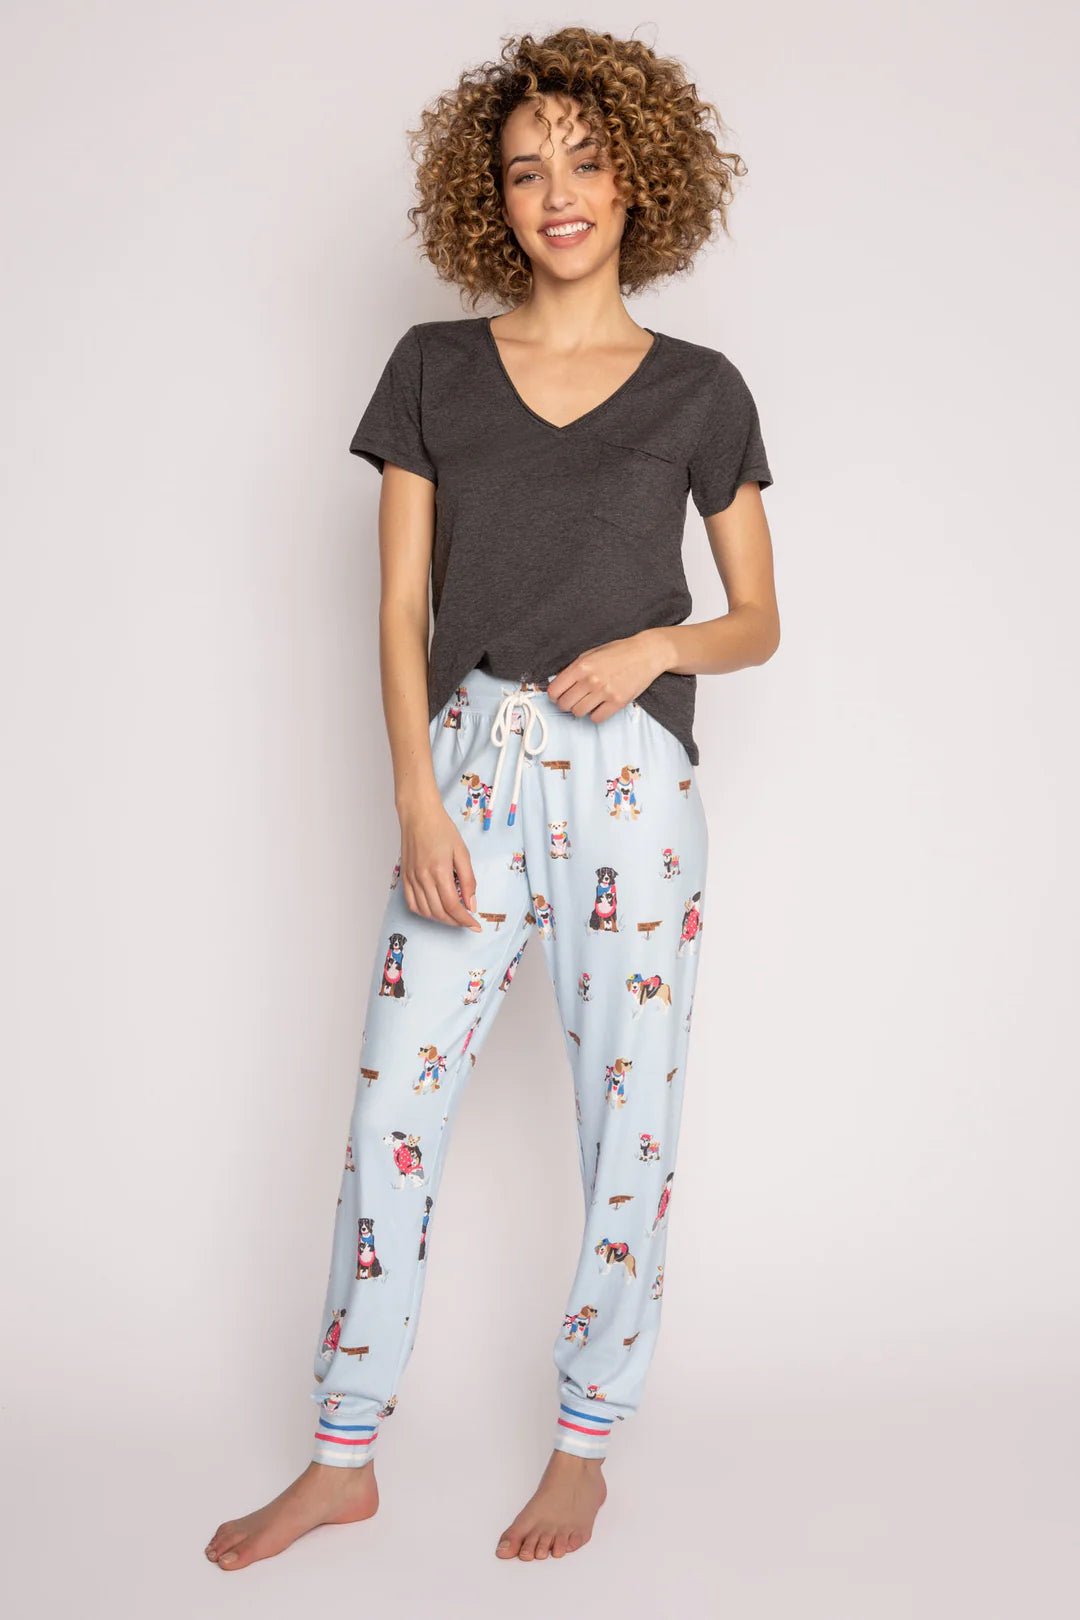 Shop PJ Salvage Ruffin It Pyjama Pants - Premium PJ Pants from PJ Salvage Online now at Spoiled Brat 